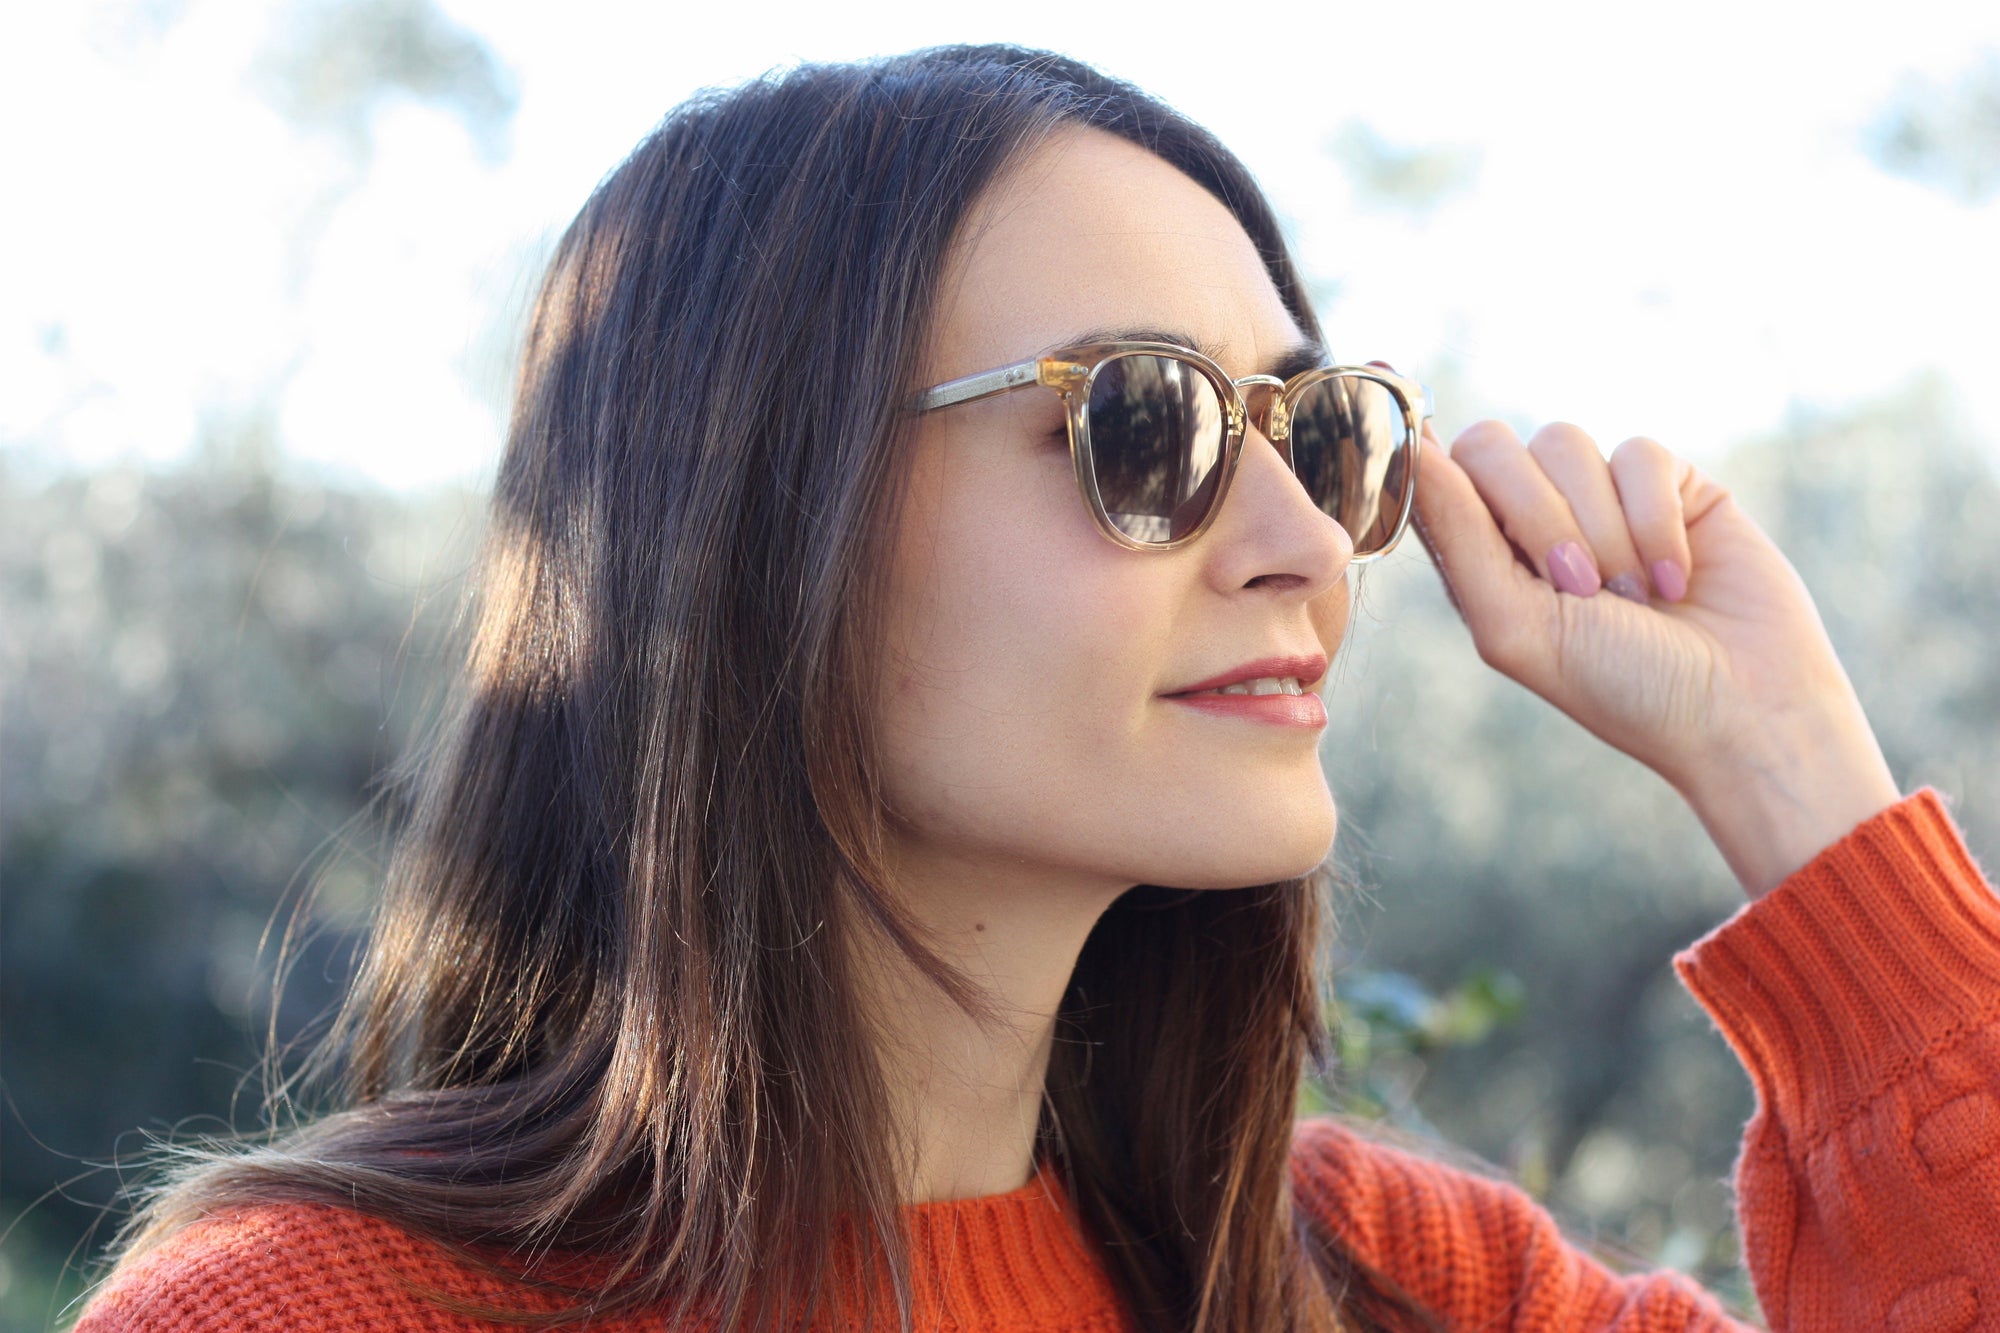 Do mirrored sunglasses scratch easily? | KOALAEYE OPTICAL